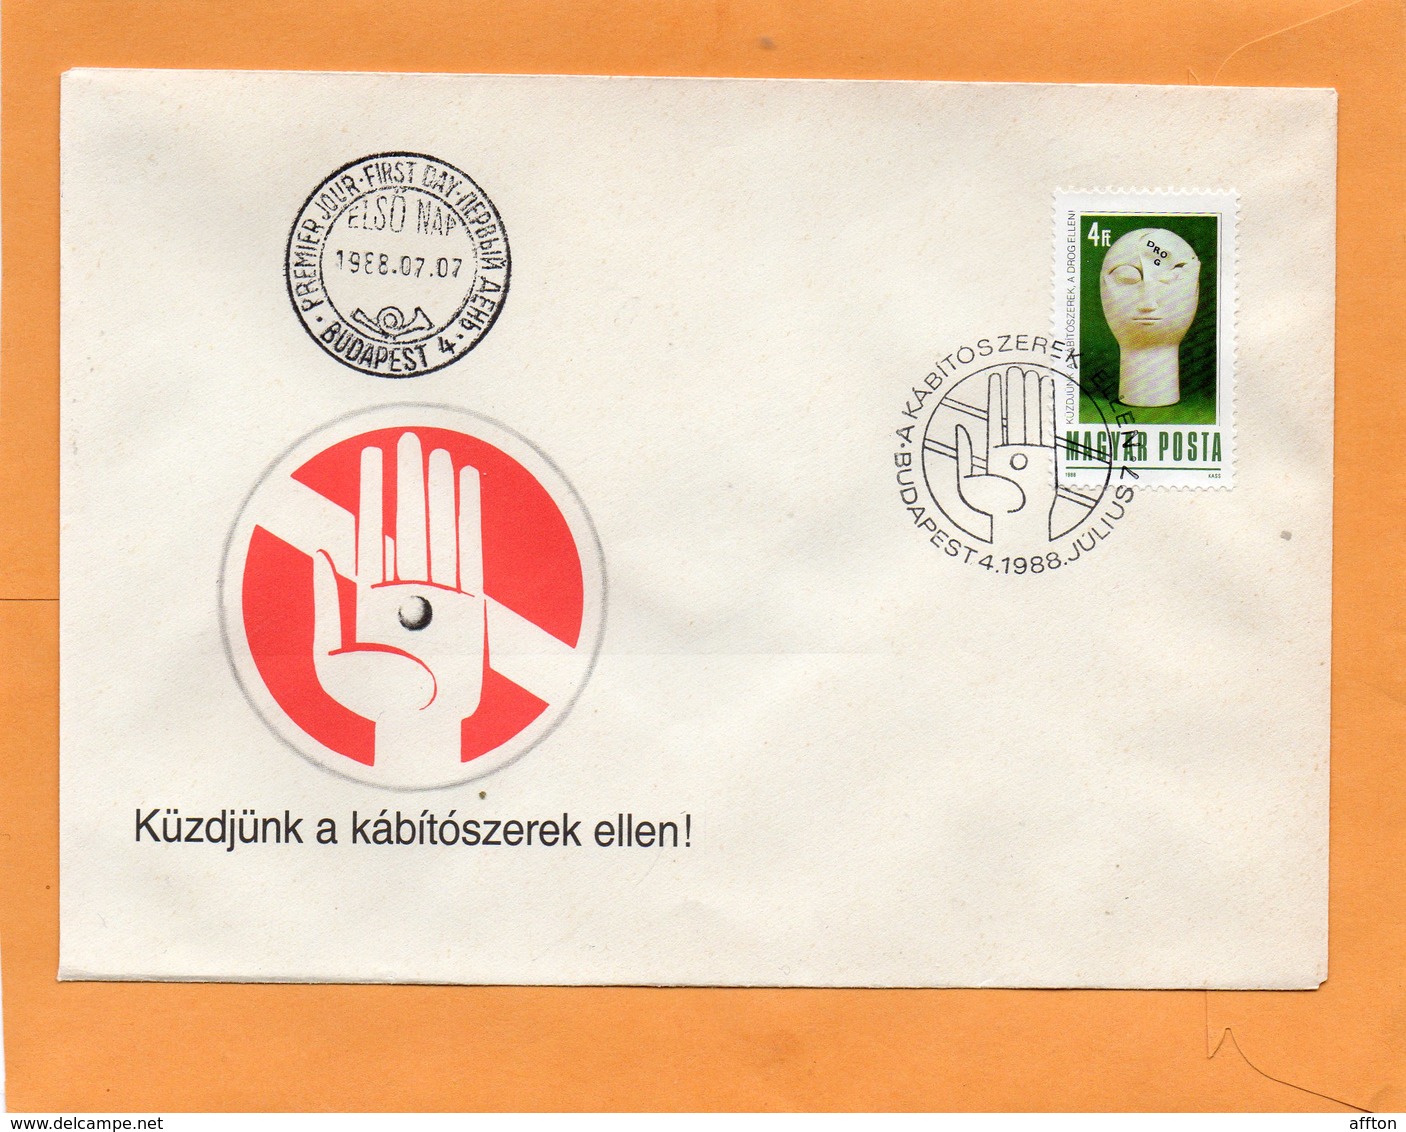 Hungary 1988 FDC - FDC